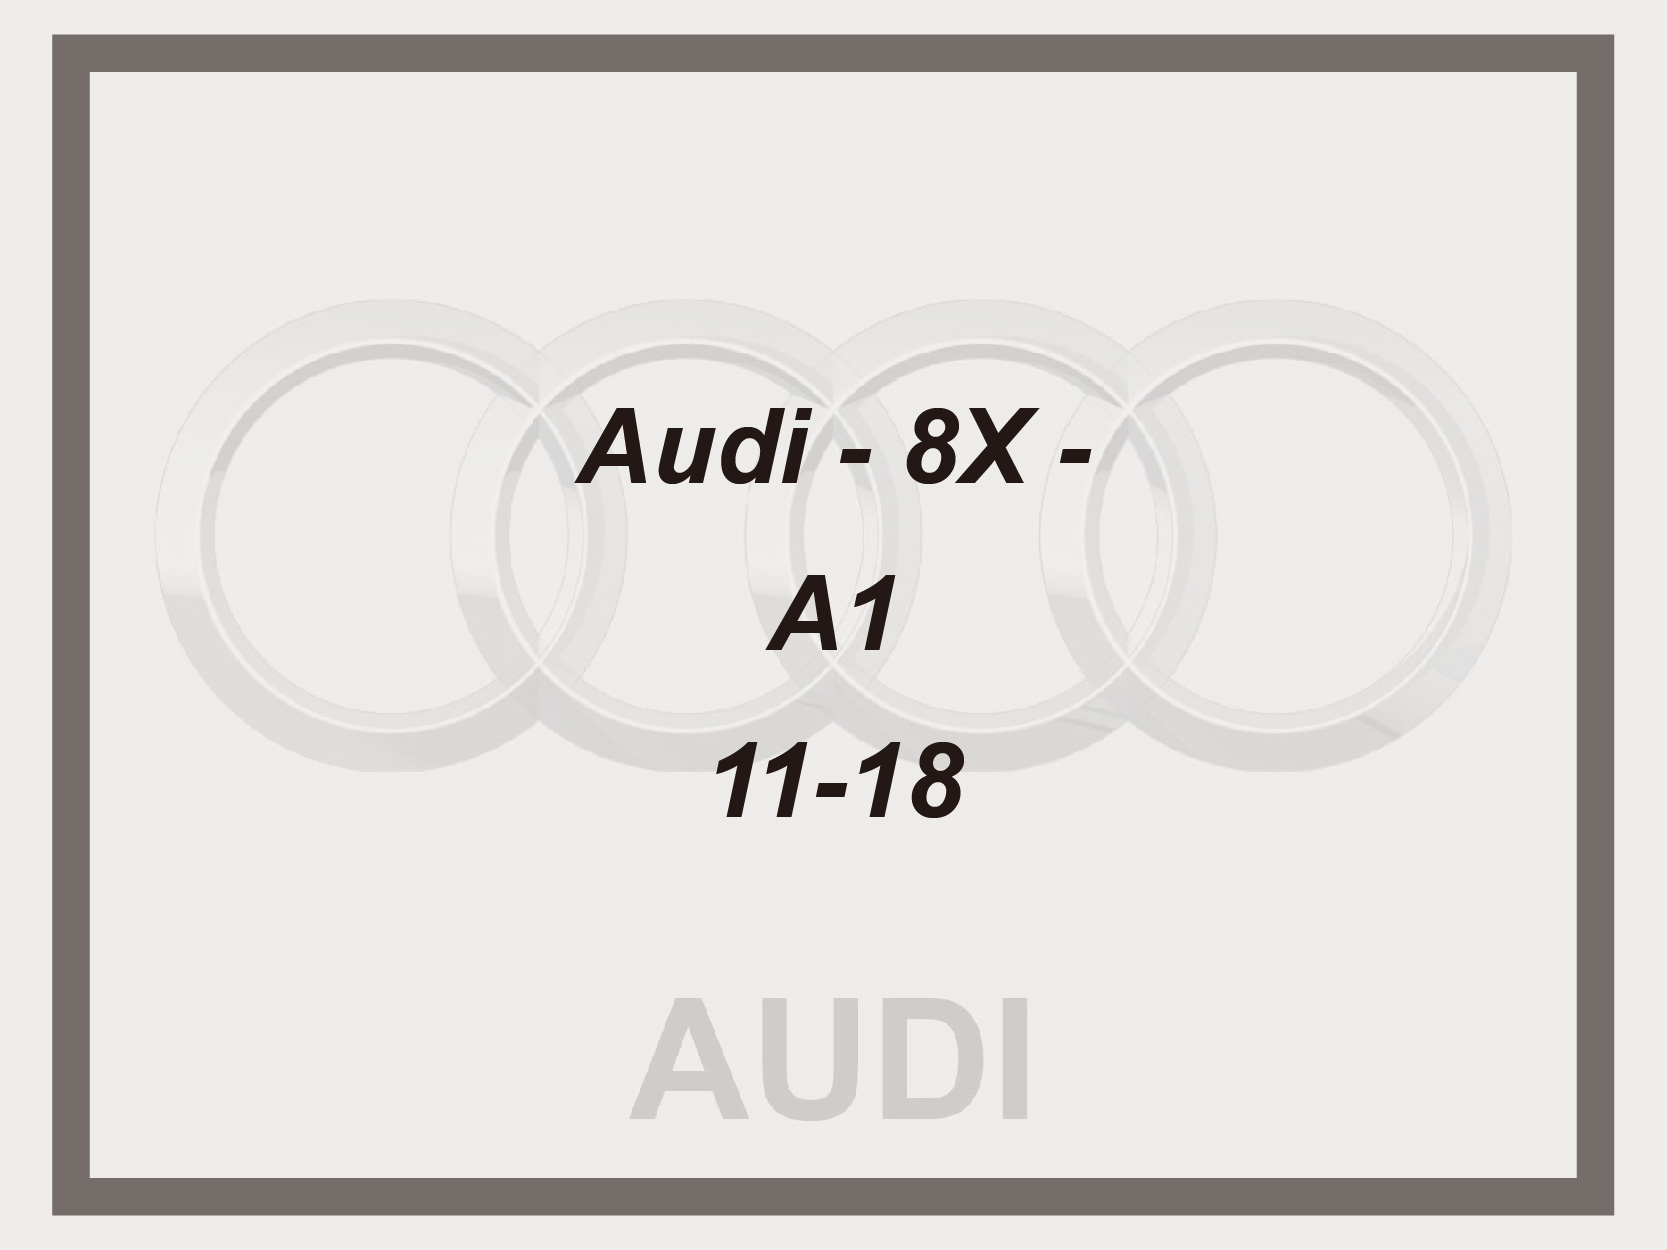 Audi - 8X - A1 - 11-18